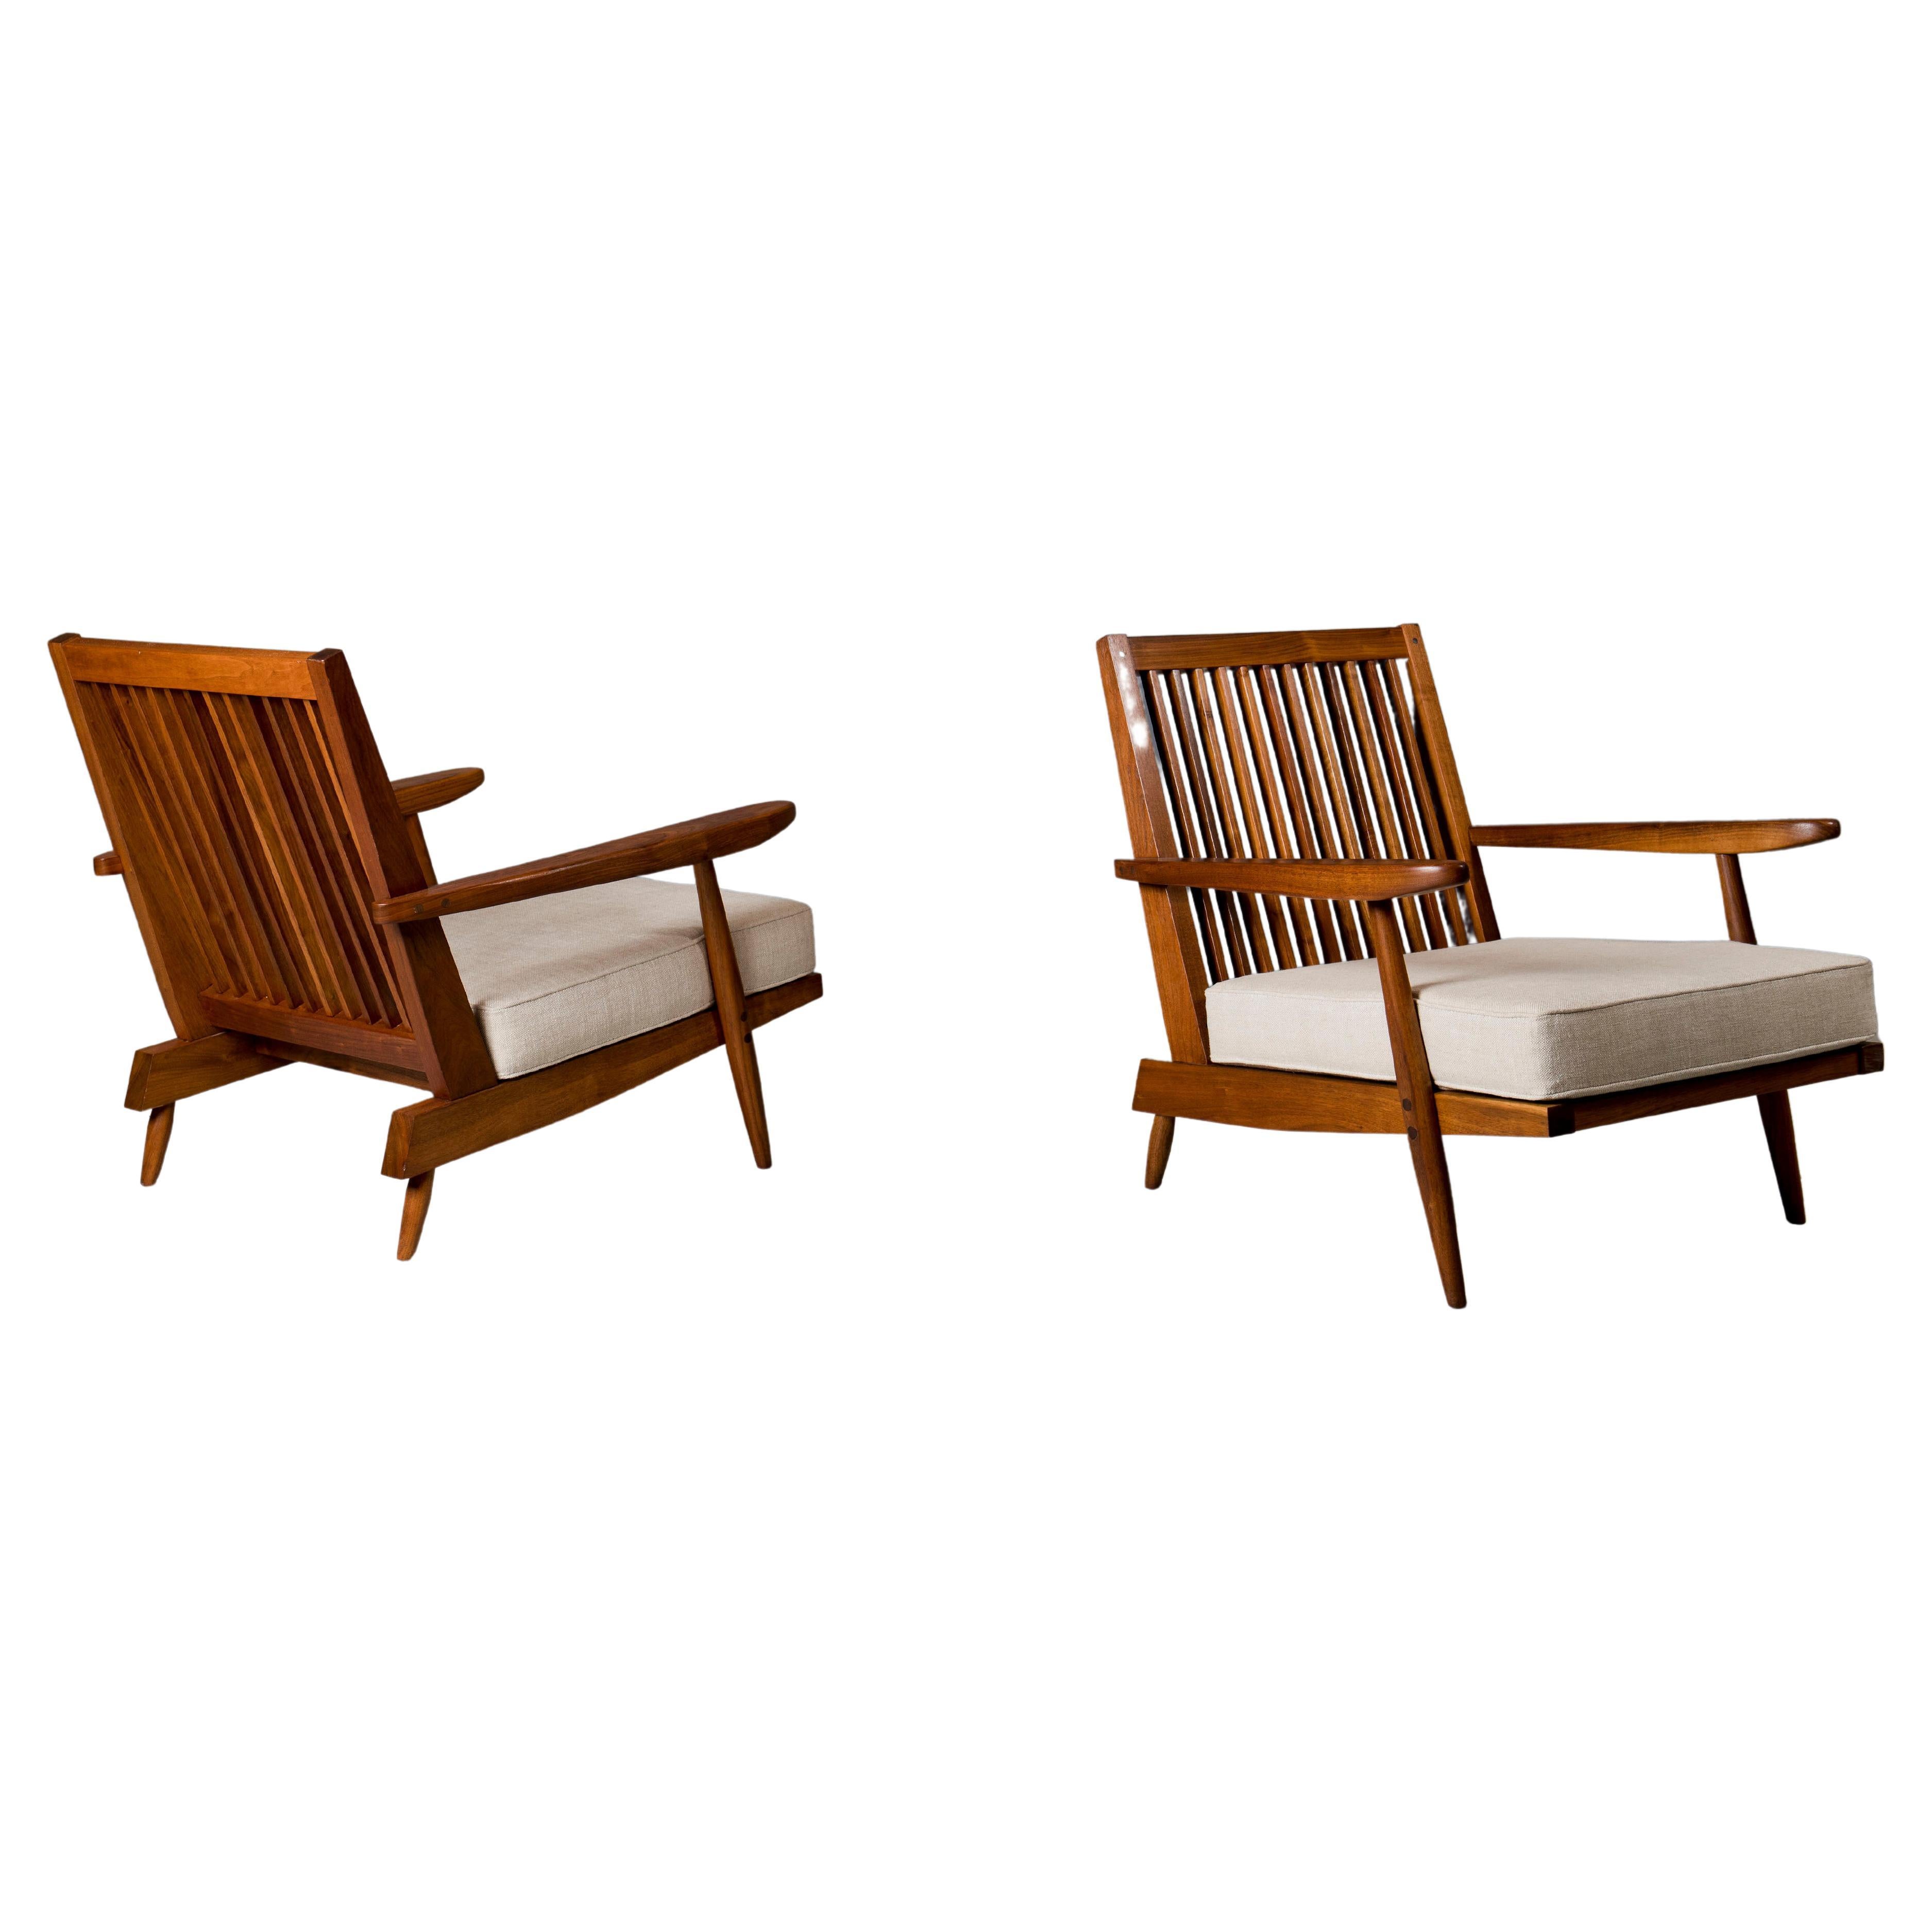 George Nakashima, Pair of "Cushion" Chairs, 1960s